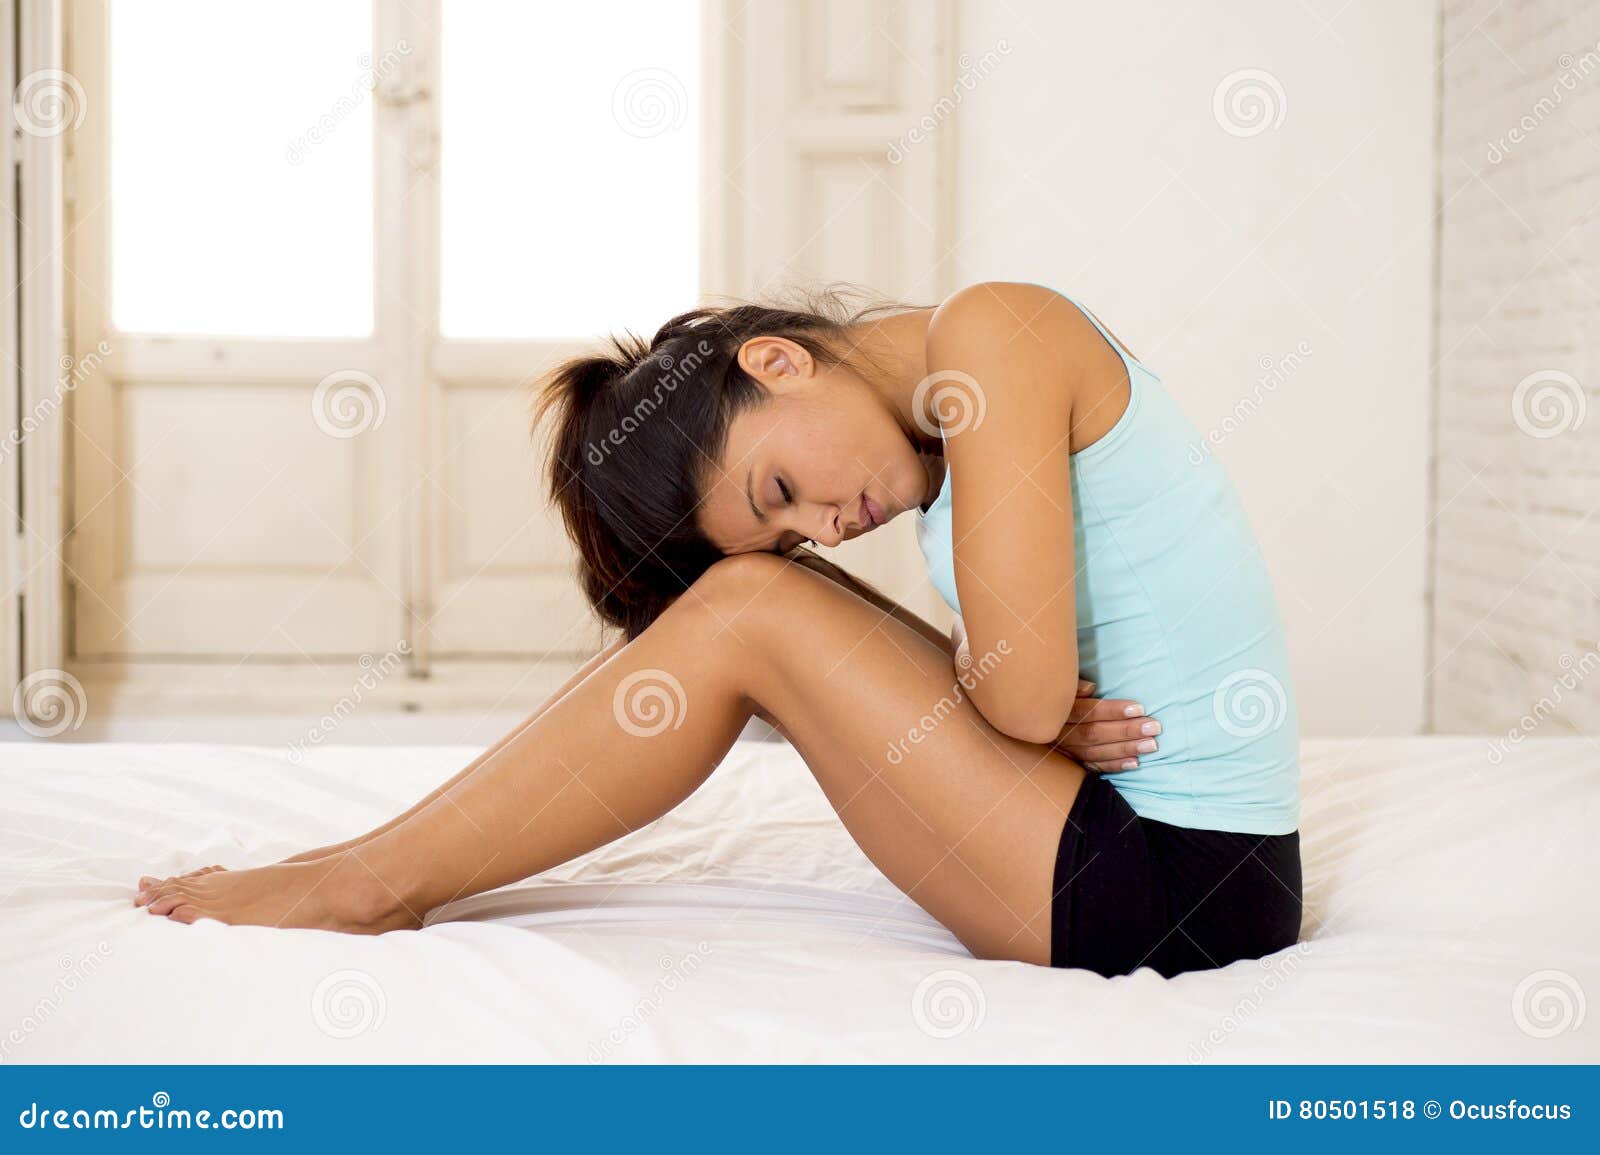 young beautiful hispanic woman holding belly suffering menstrual period pain